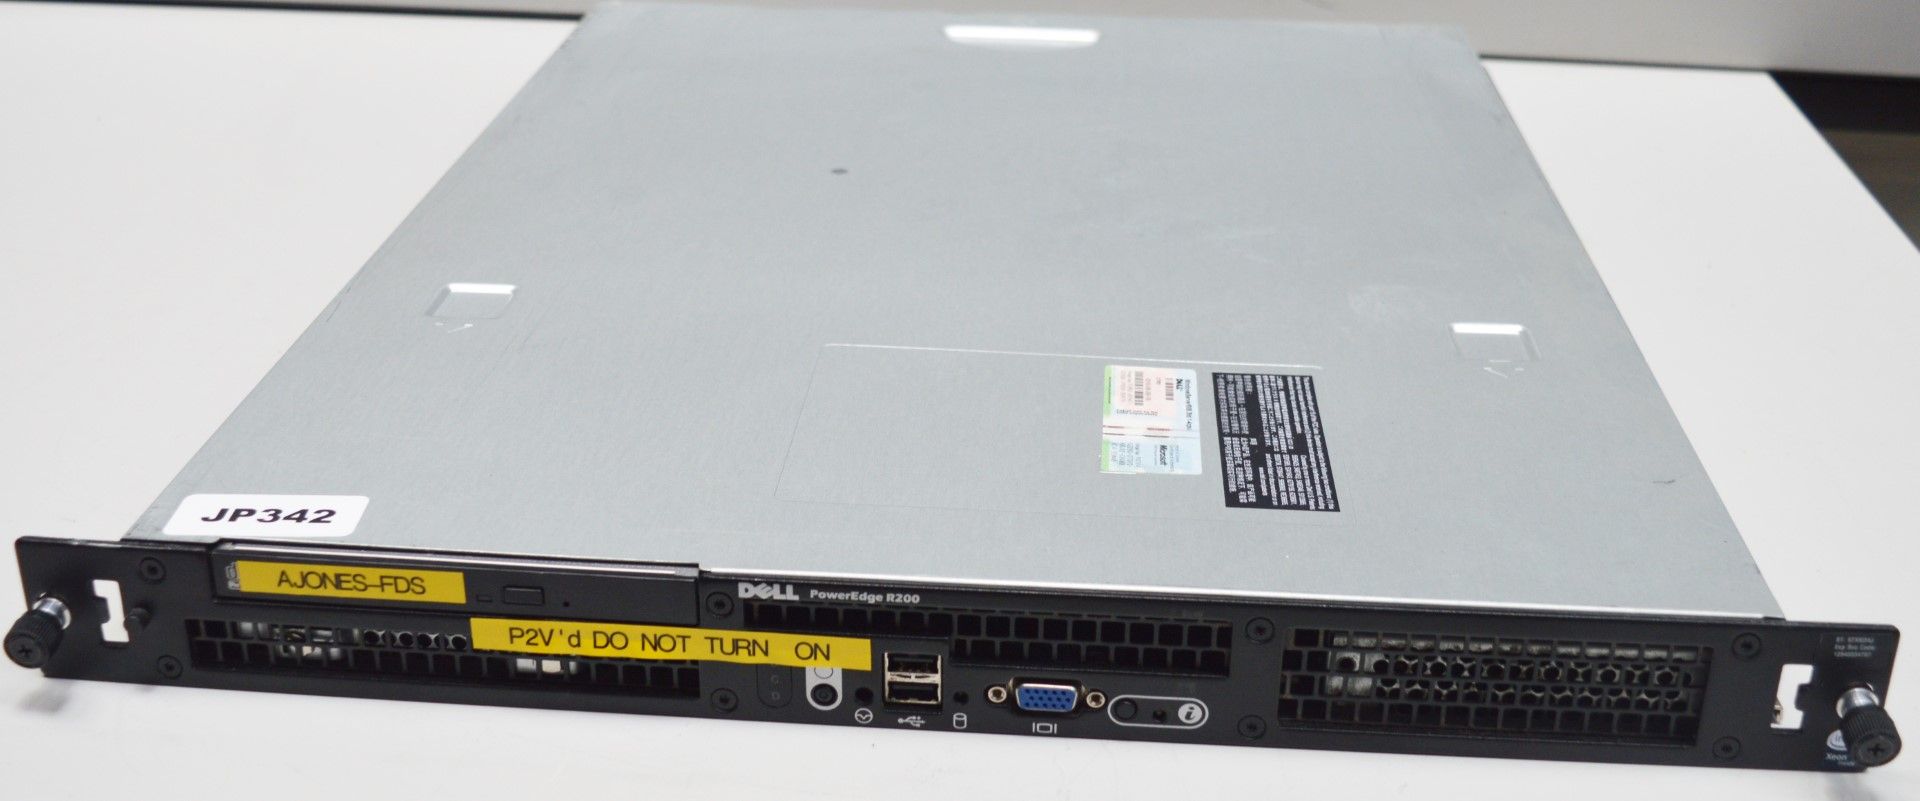 1 x Dell PowerEdge R200 Rack Server With Xeon Quad Core Processor, 4gb Ram and Windows Server 2008